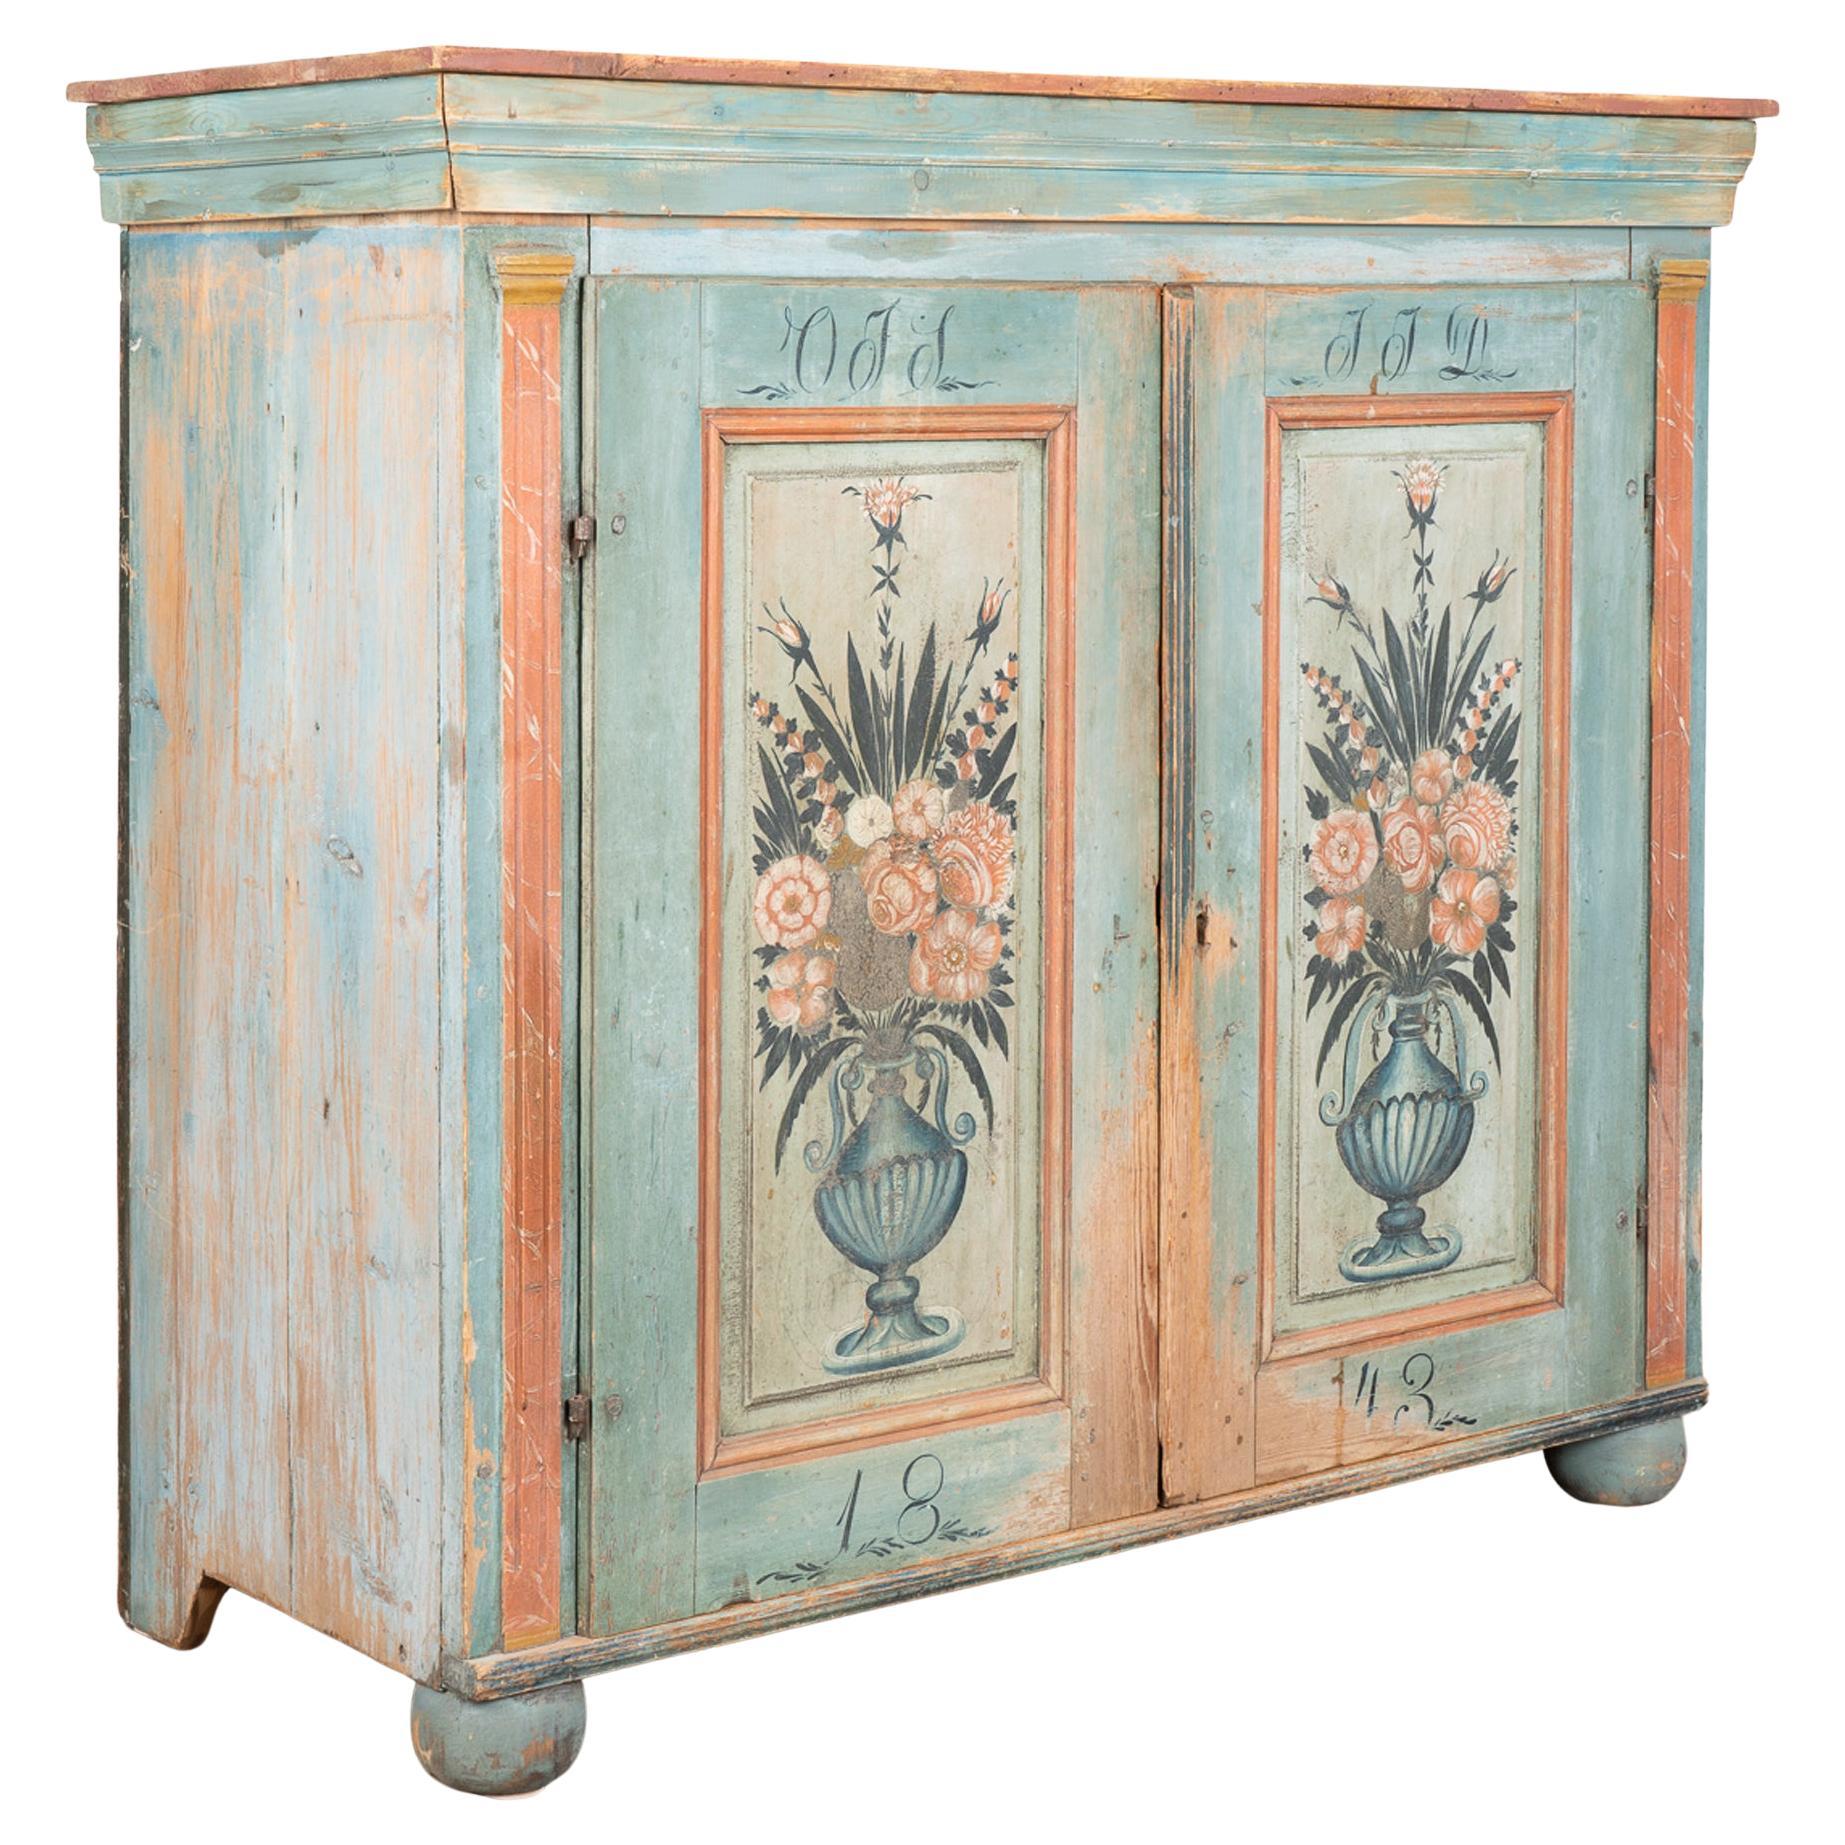 Original Blue Painted Sideboard Cabinet, Sweden dated 1843 For Sale